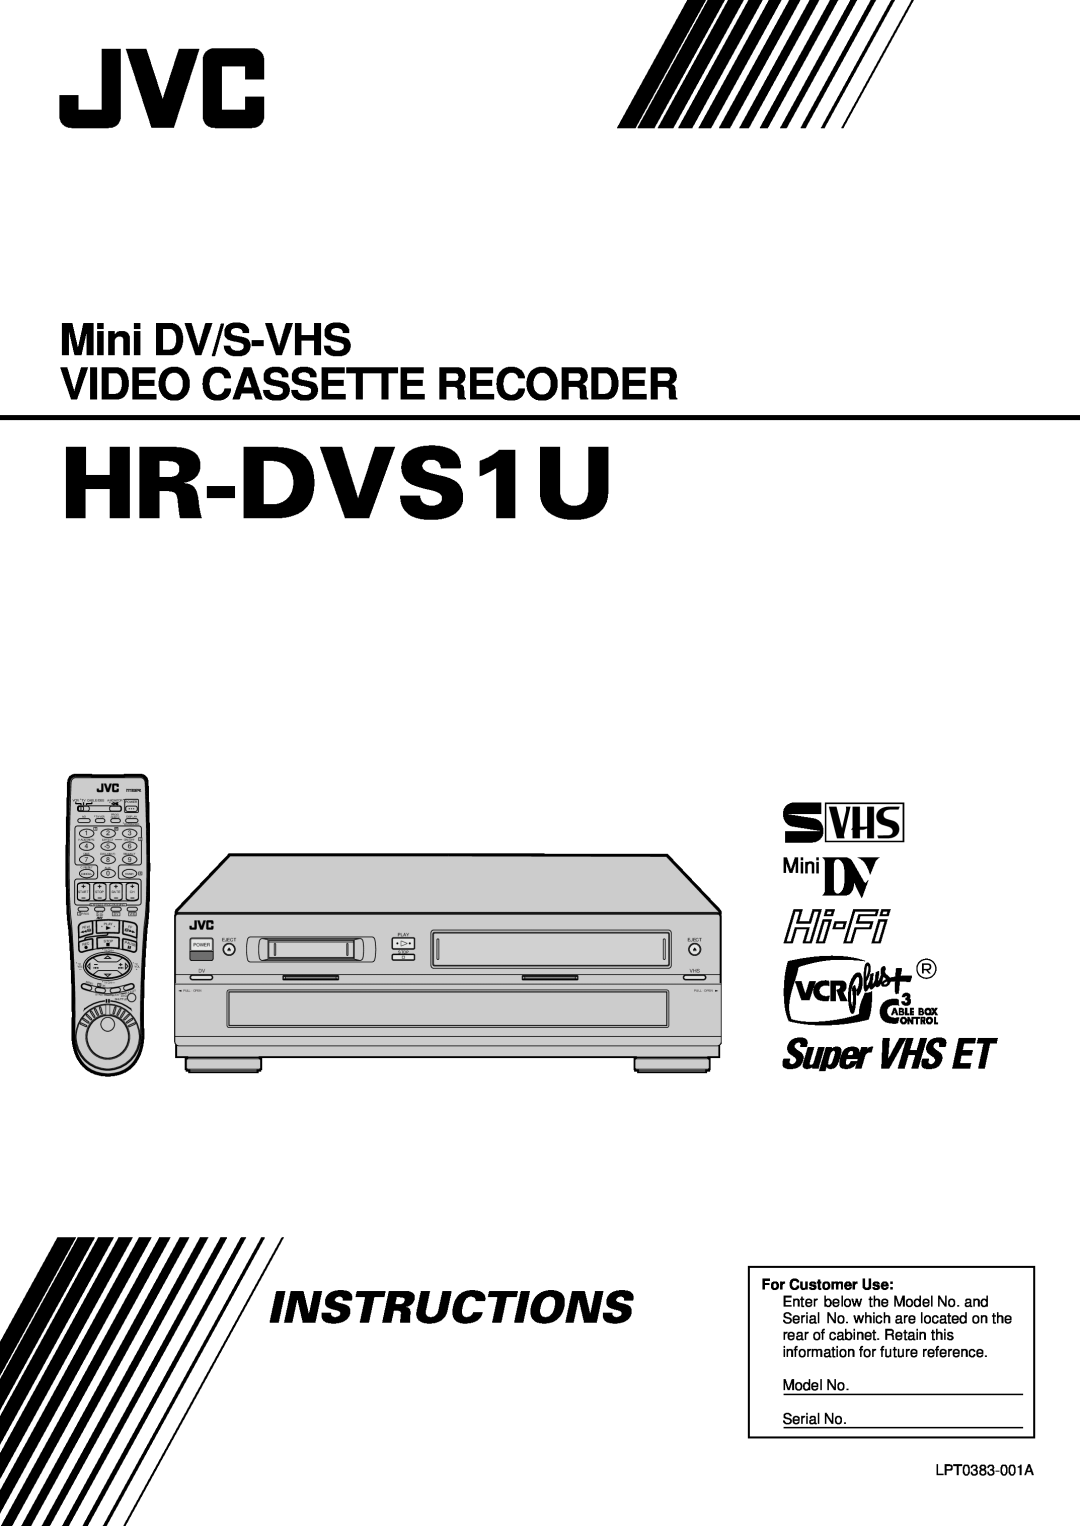 JVC Model HR-DVS1U manual Mini DV/S-VHS VIDEO CASSETTE RECORDER, Instructions, For Customer Use, Model No Serial No, Play 